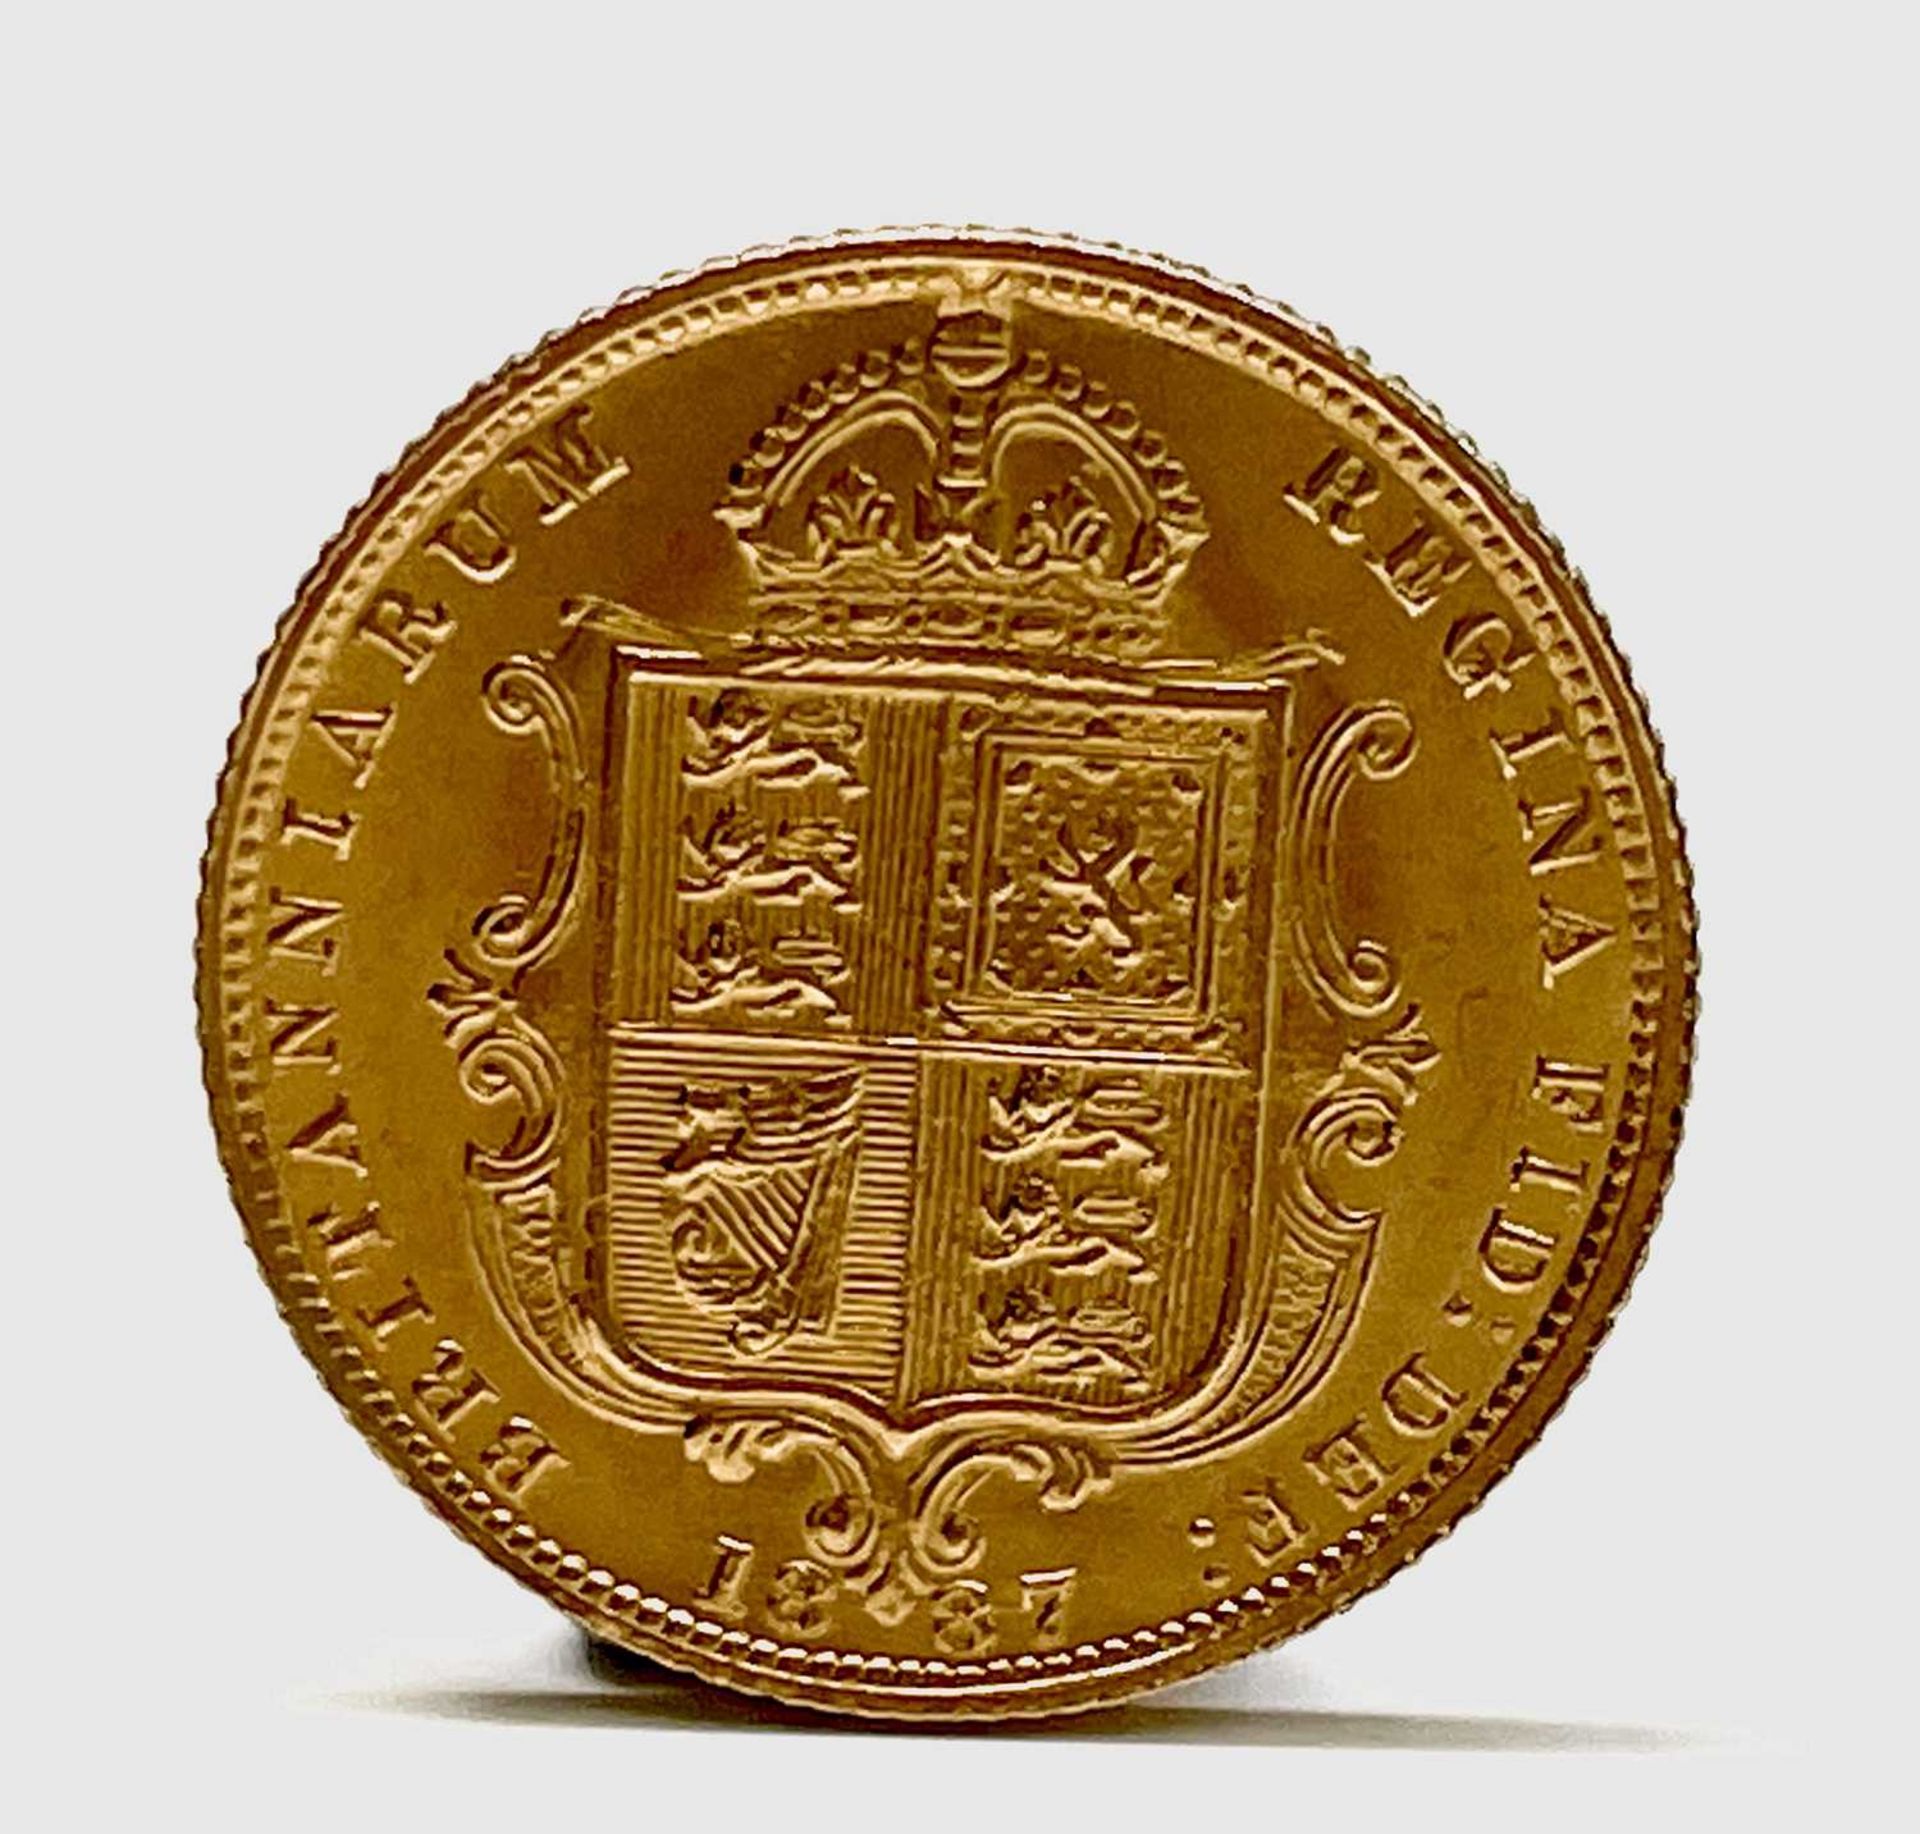 Great Britain Gold Half Sovereign 1887 Queen Victoria Shield Jubilee head UNC Condition: please